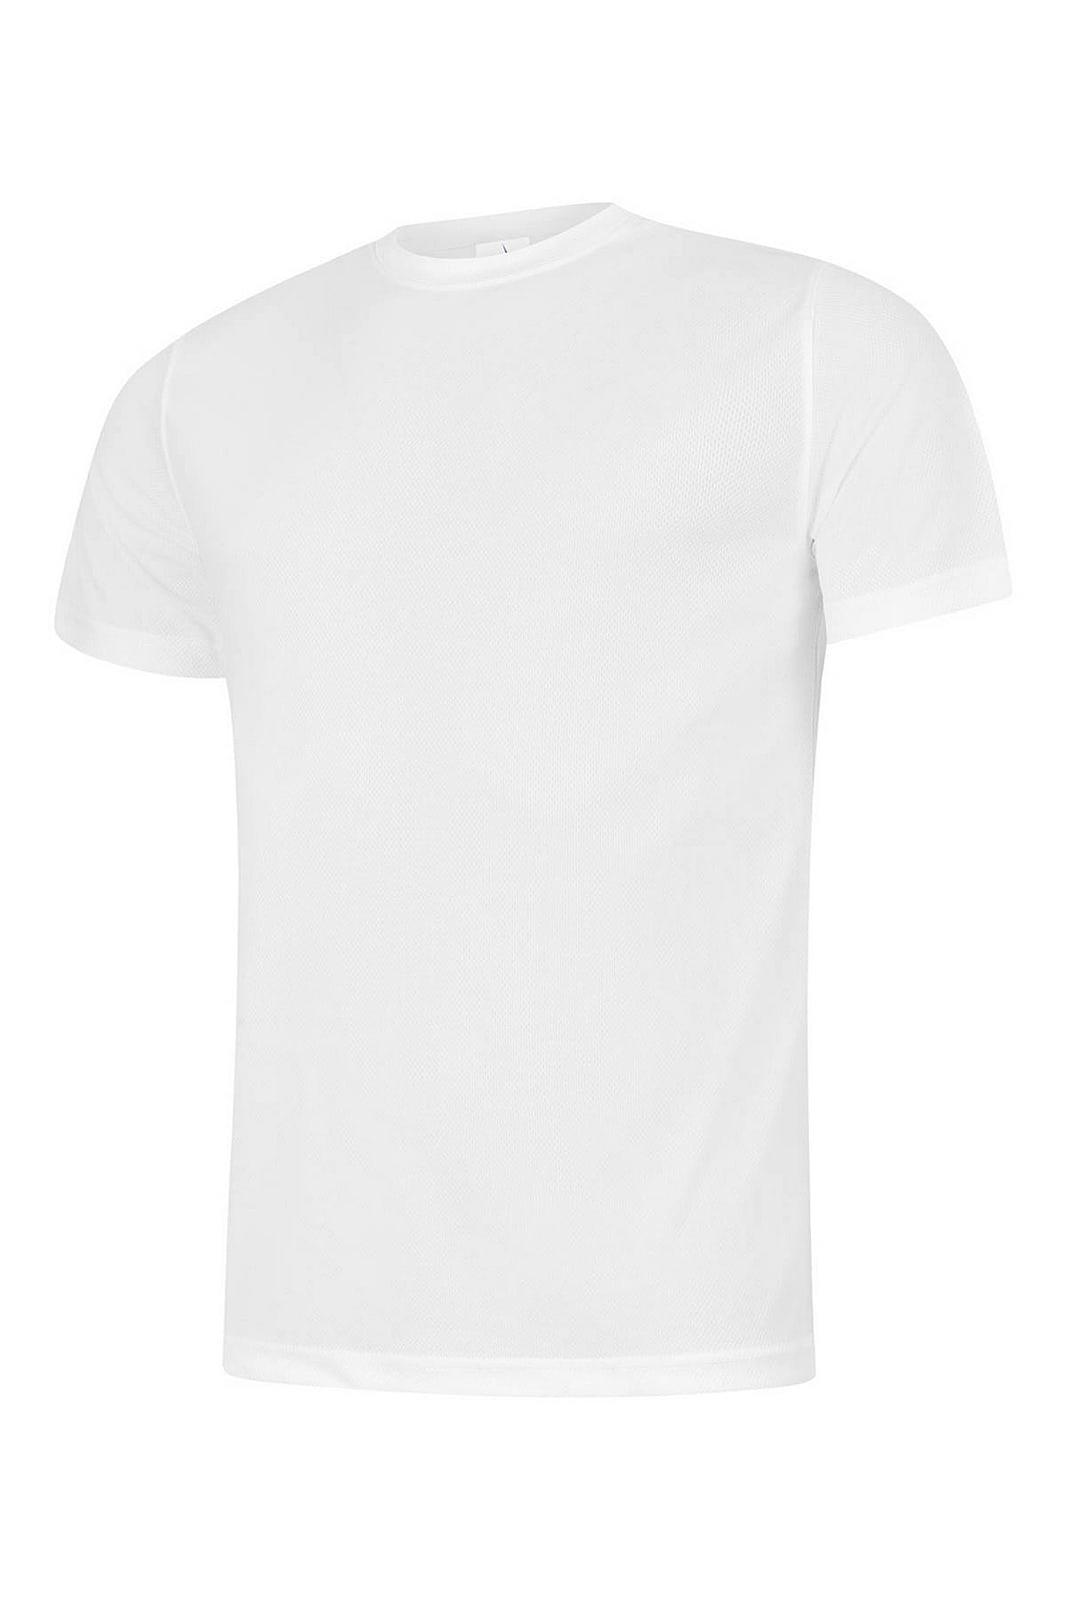 Uneek 140GSM Ultra Cool T-Shirt | UC315 | Workwear Supermarket